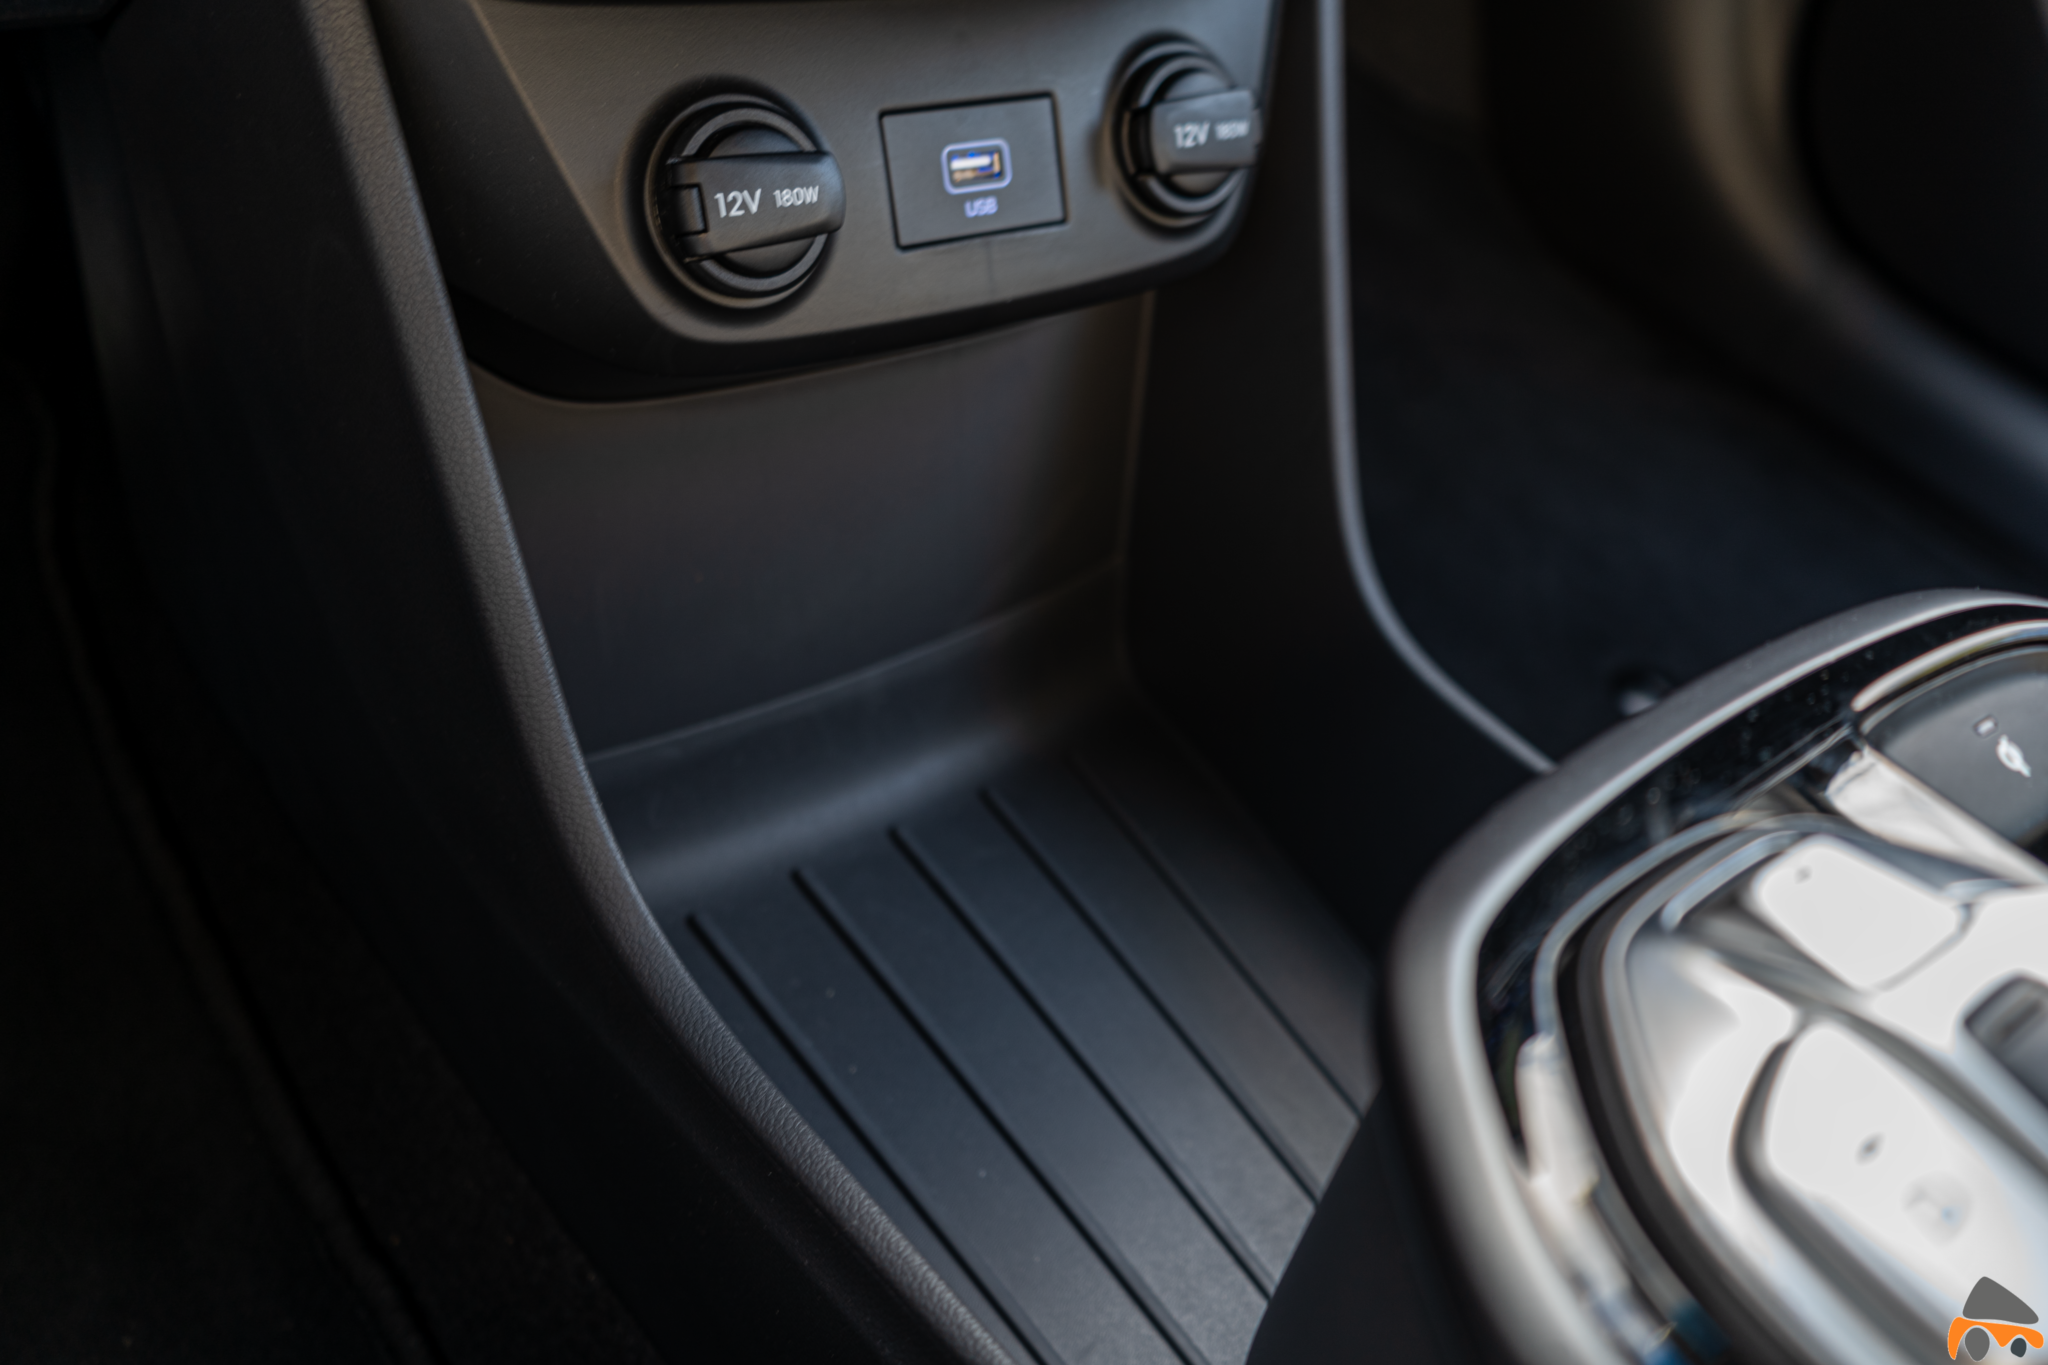 Hueco consola central Hyundai Ioniq Electrico - Prueba Hyundai Ioniq EV 2020: Un referente para la movilidad eléctrica